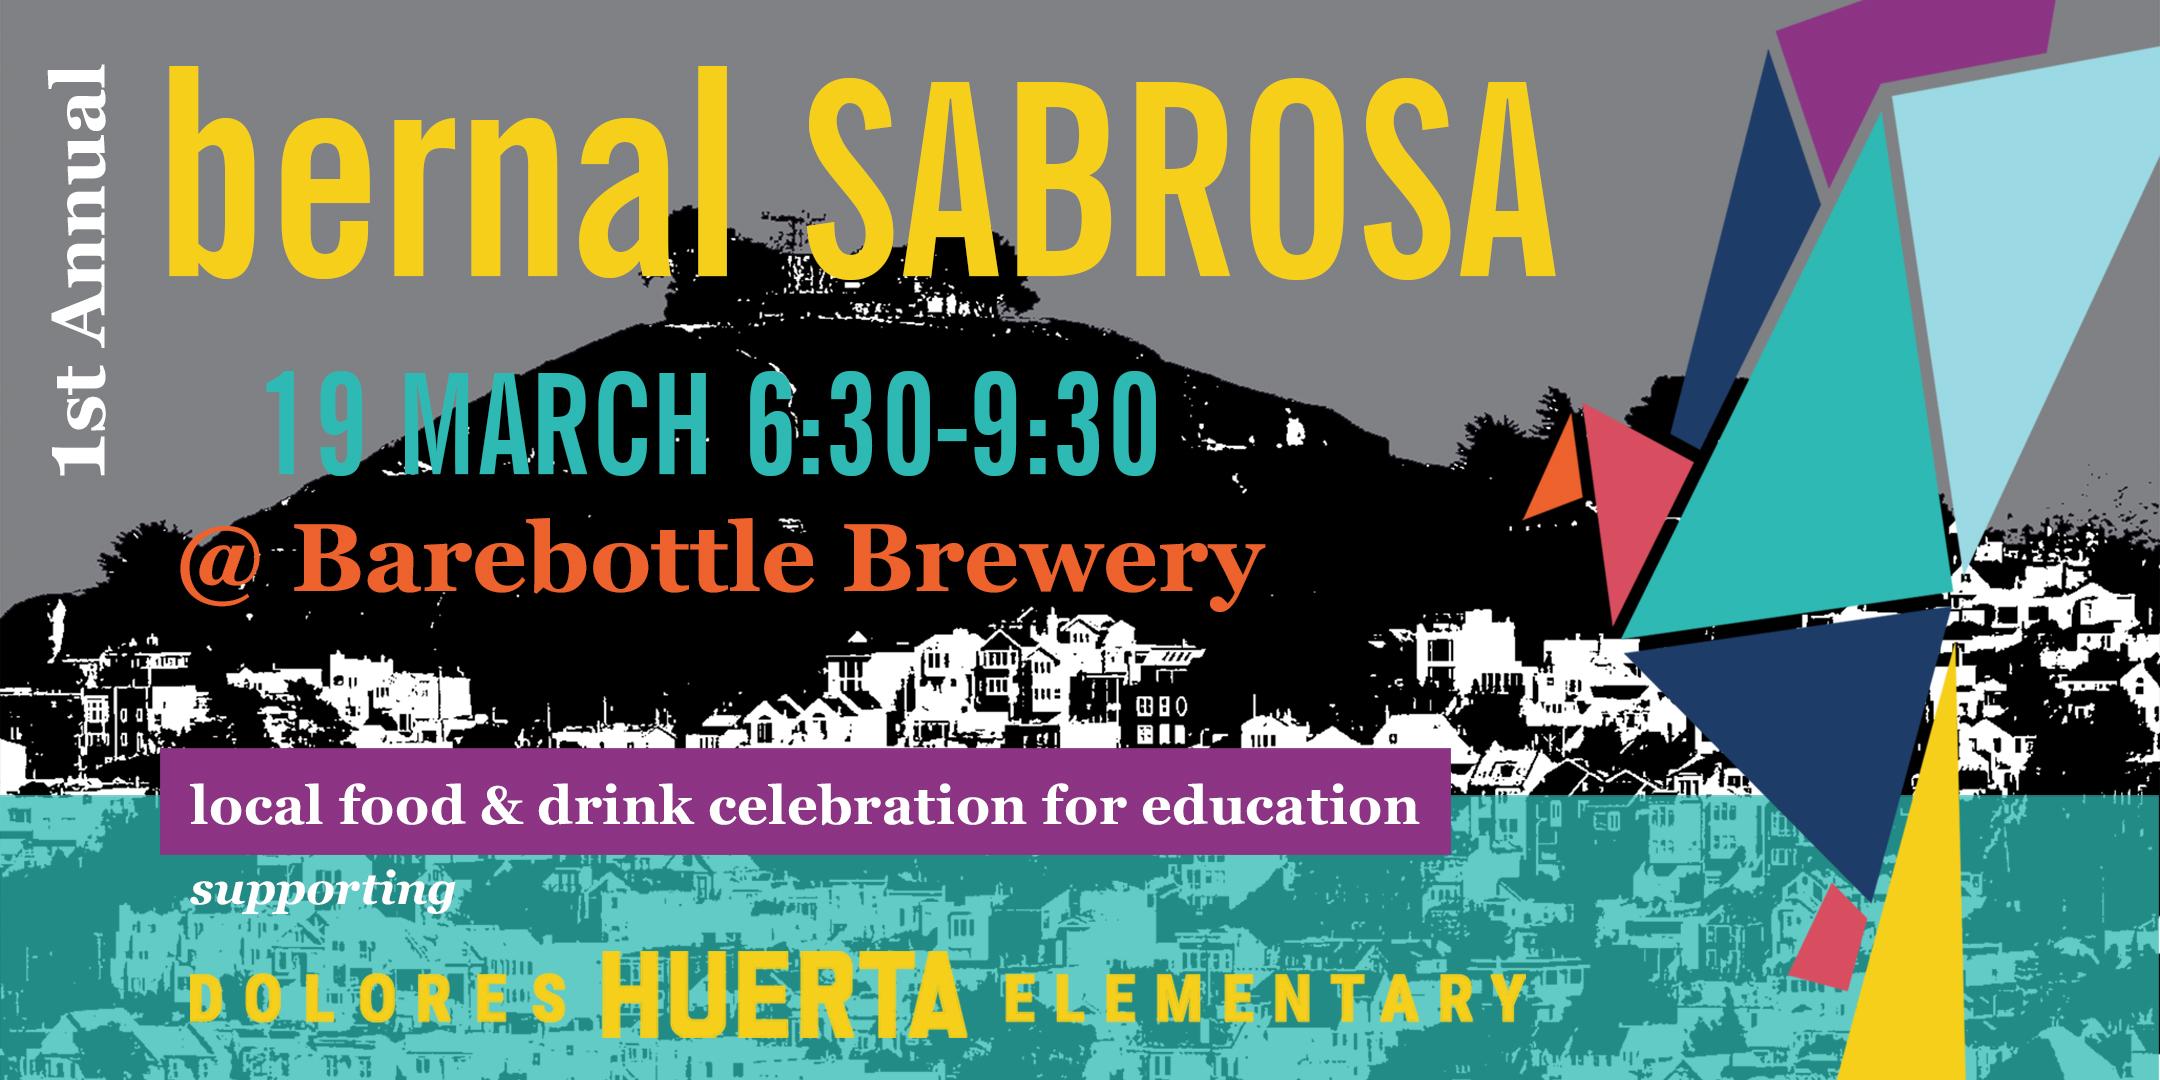 POSTPONED: Bernal Sabrosa: Local Food & Drink Celebration for Education